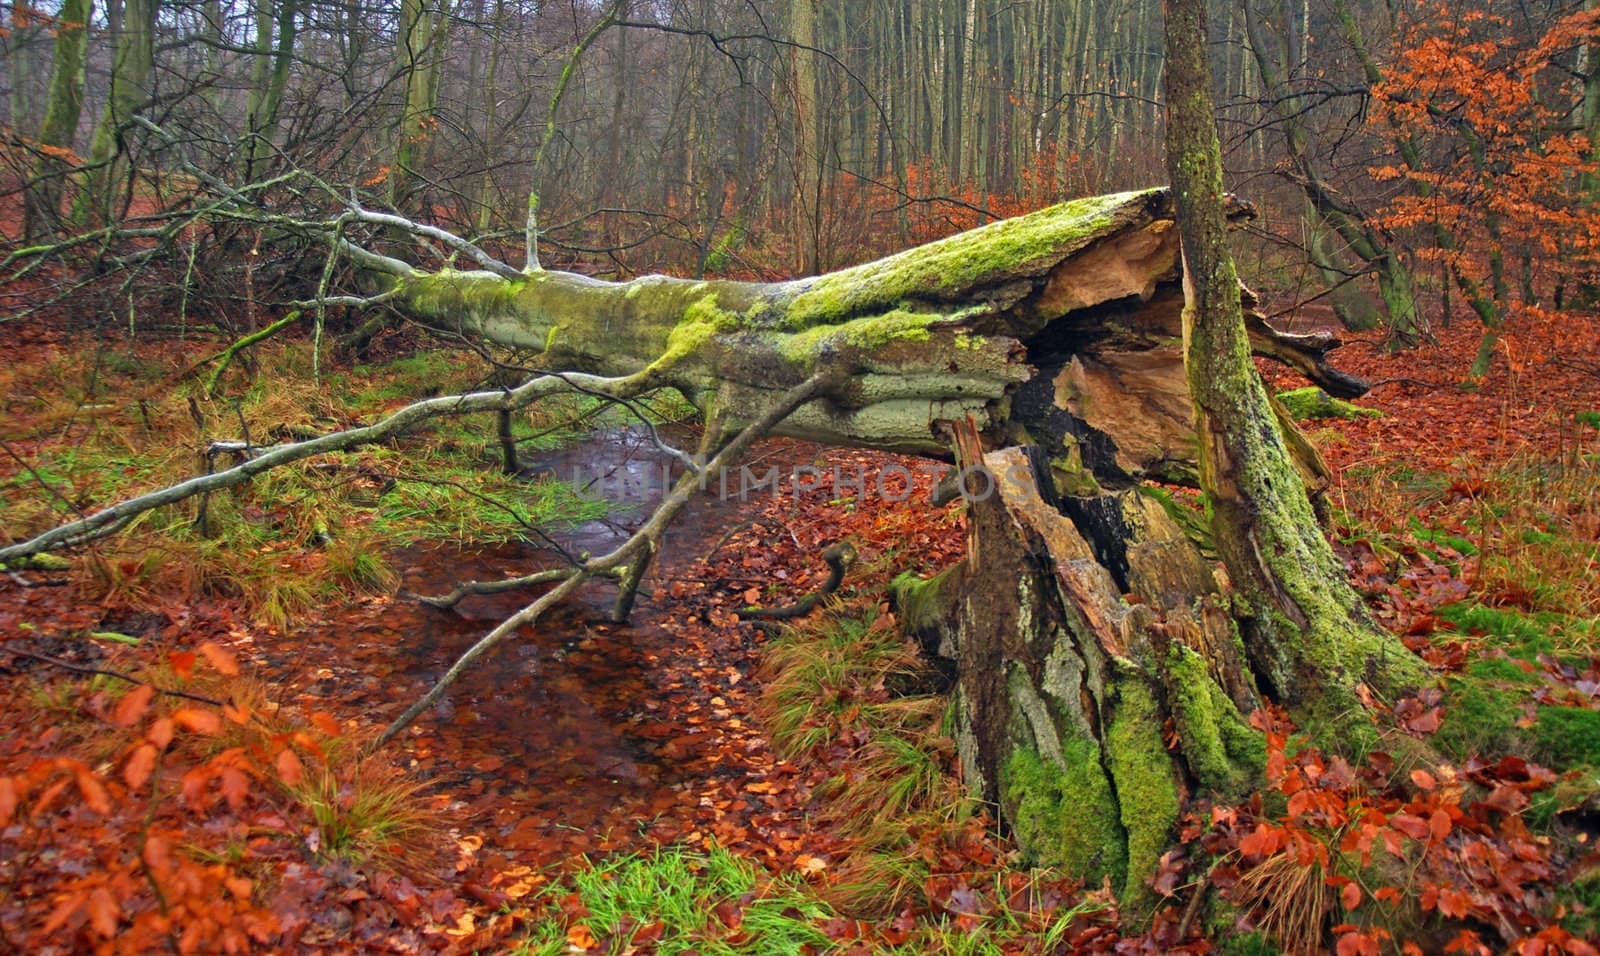 Fallen tree in autumn